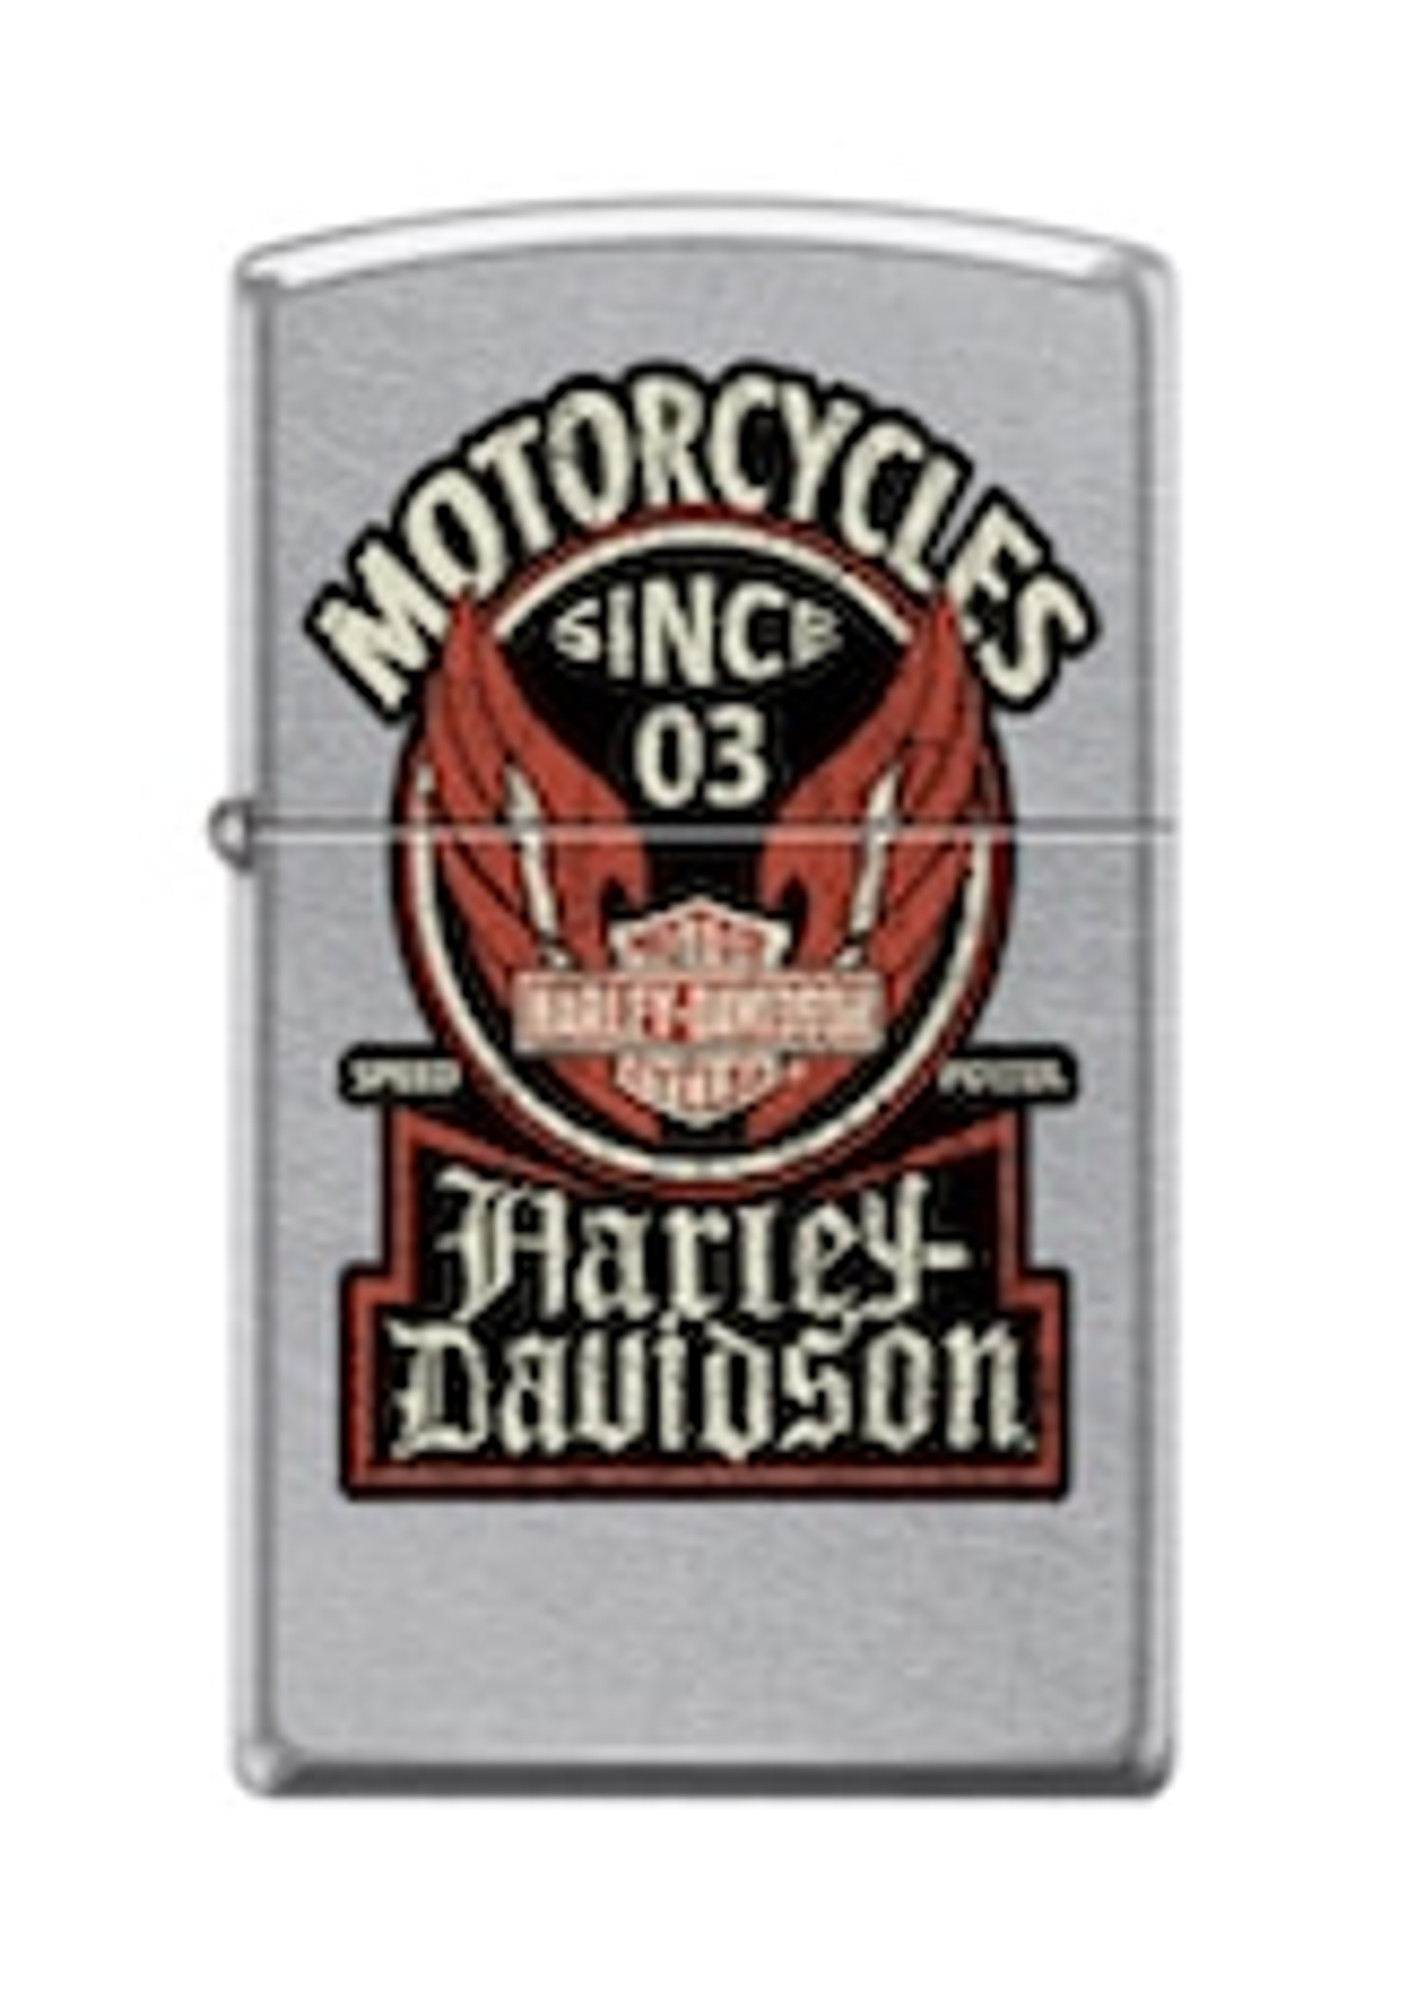 Zippo Harley Davidson